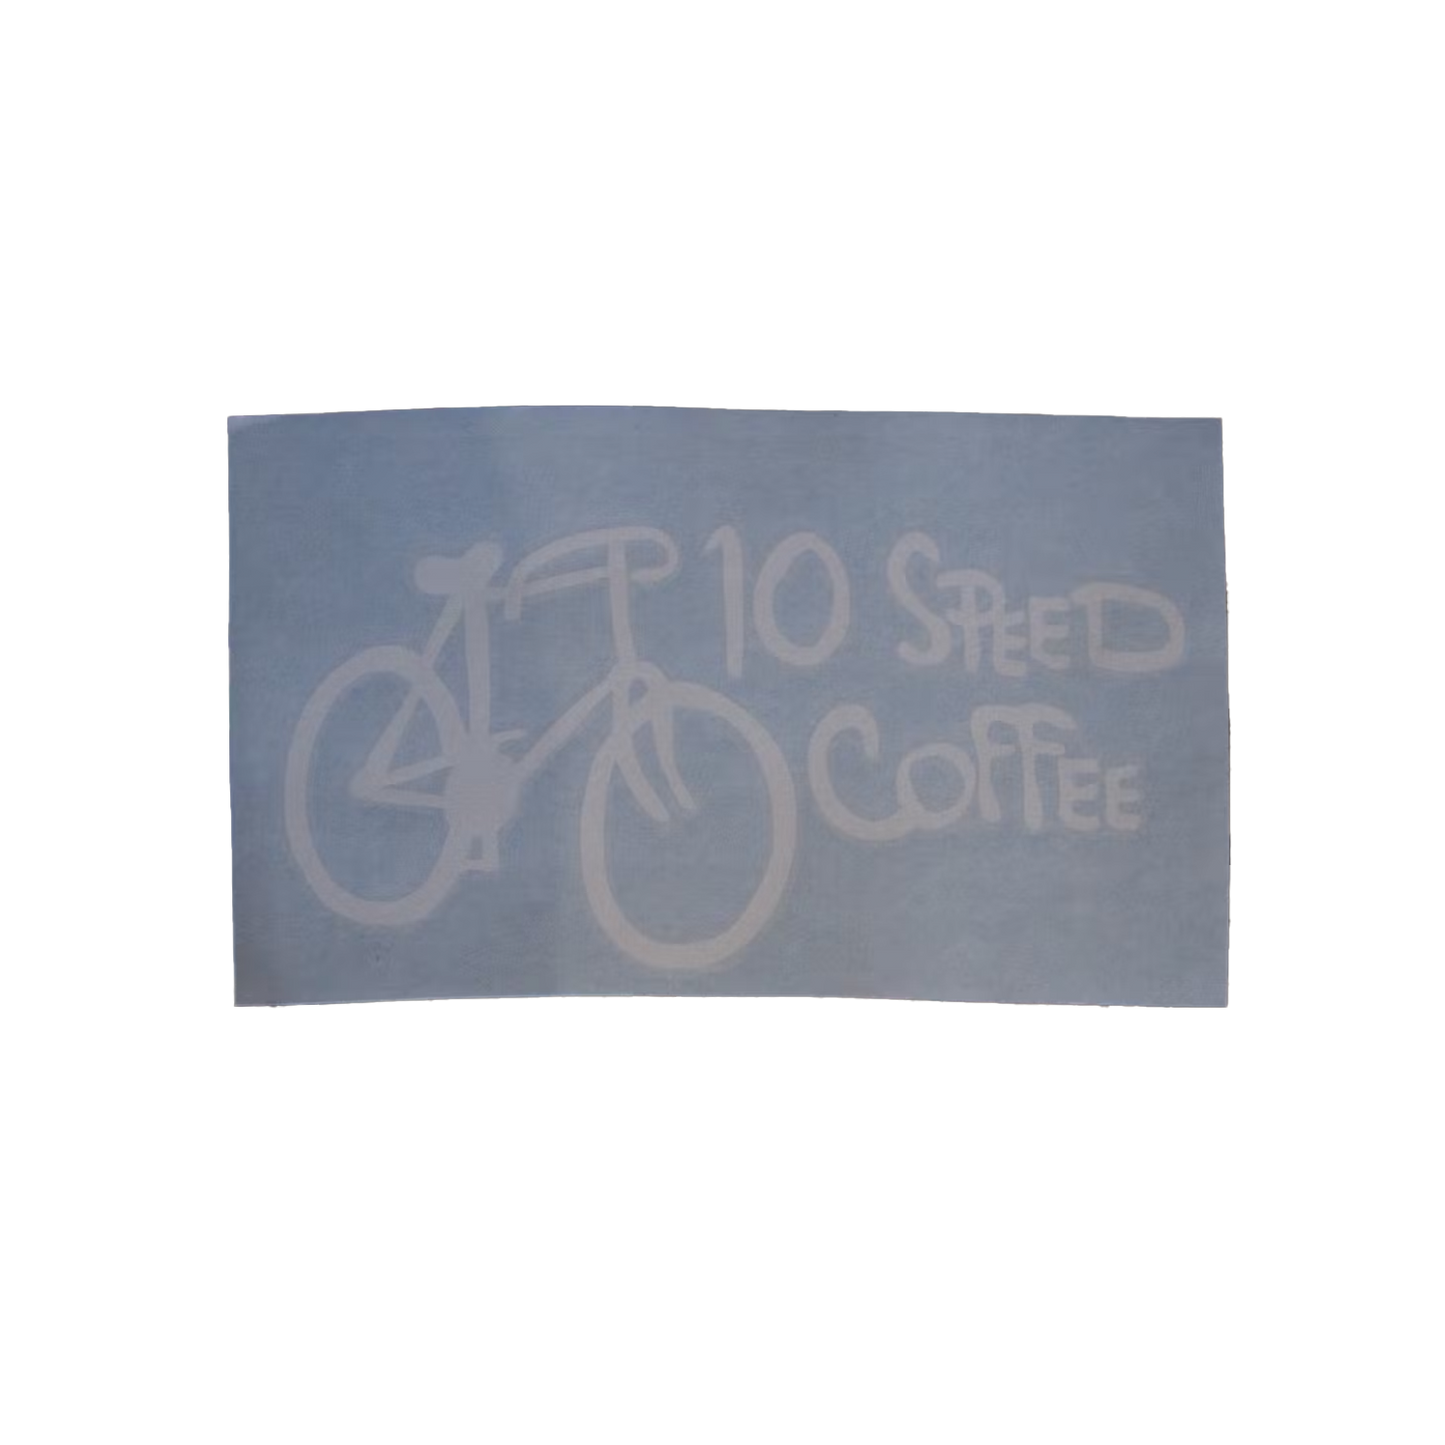 Vinyl sticker with 10 Speed Coffee logo